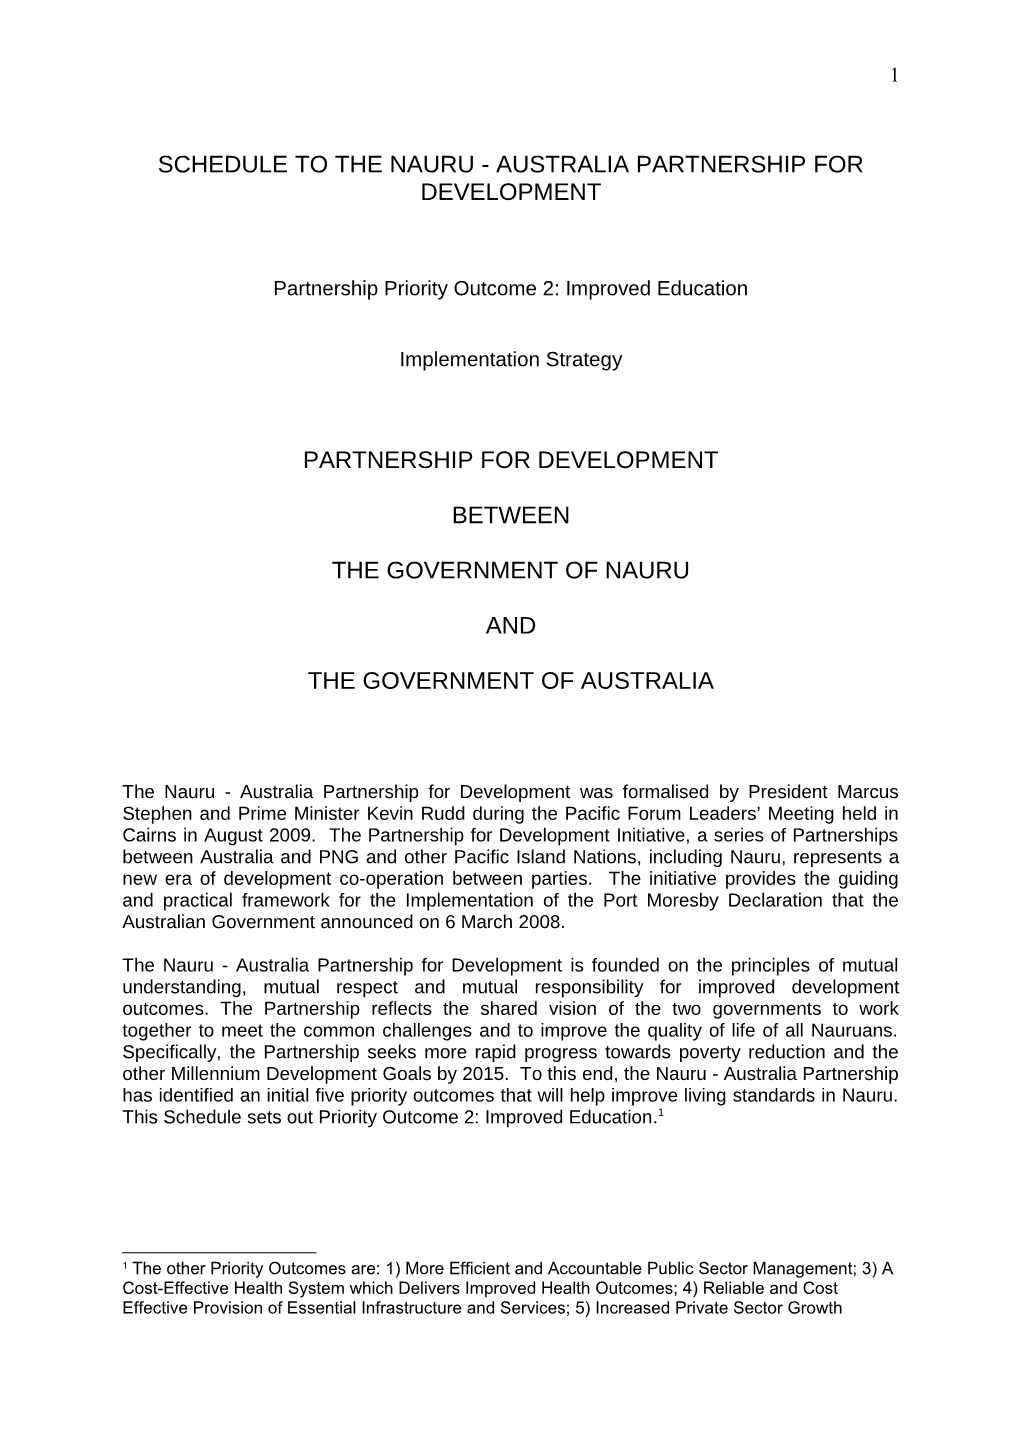 Schedule to the Nauru - Australia Partnership for Development